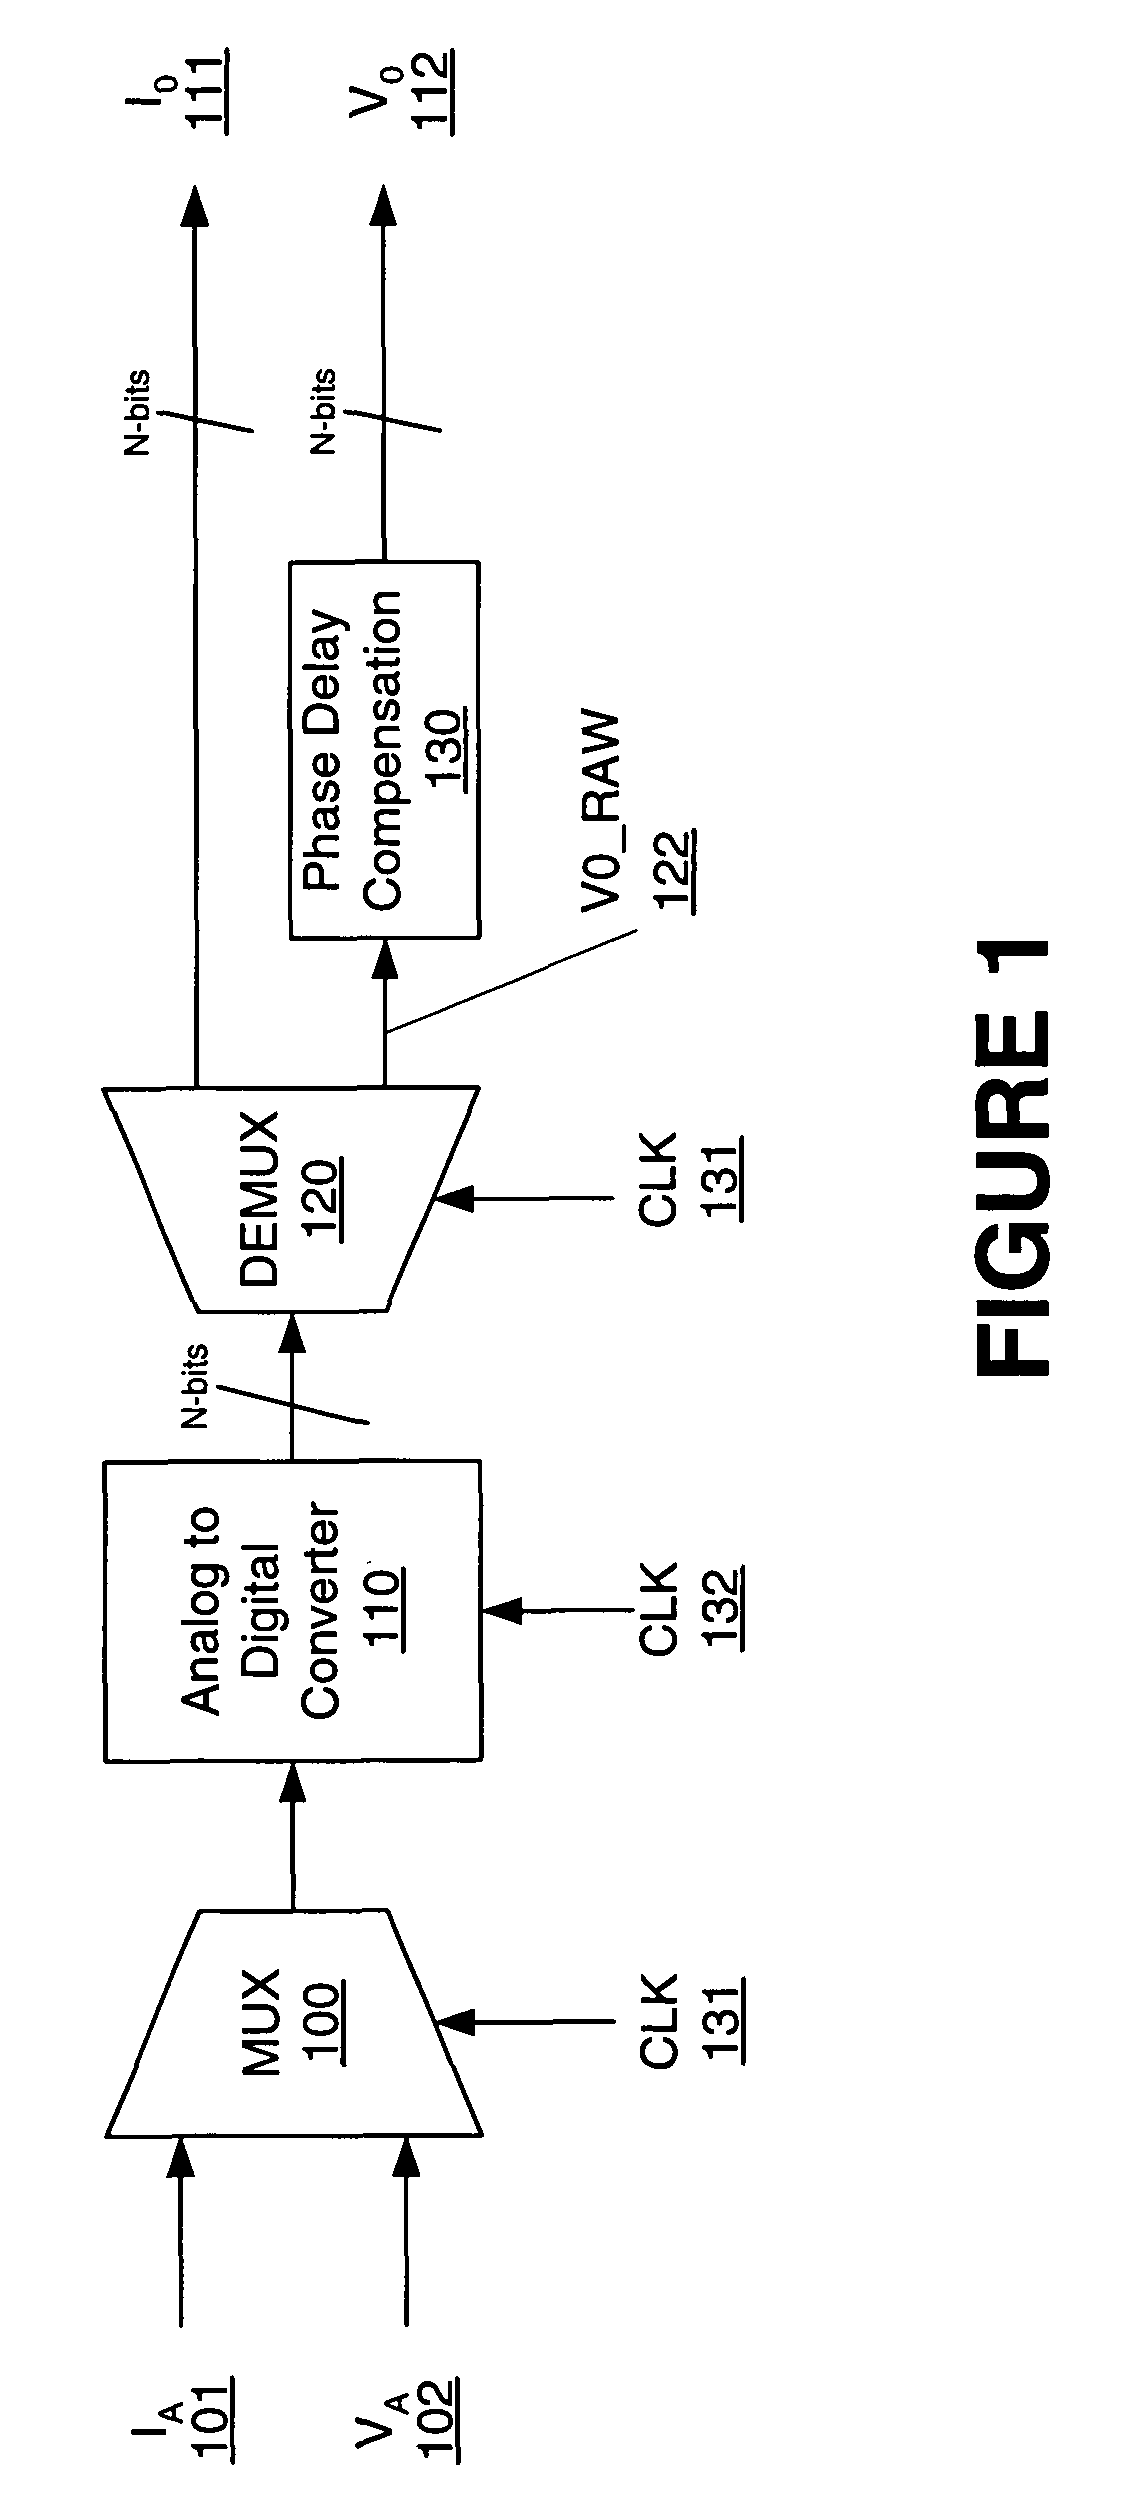 Method and apparatus of obtaining power computation parameters